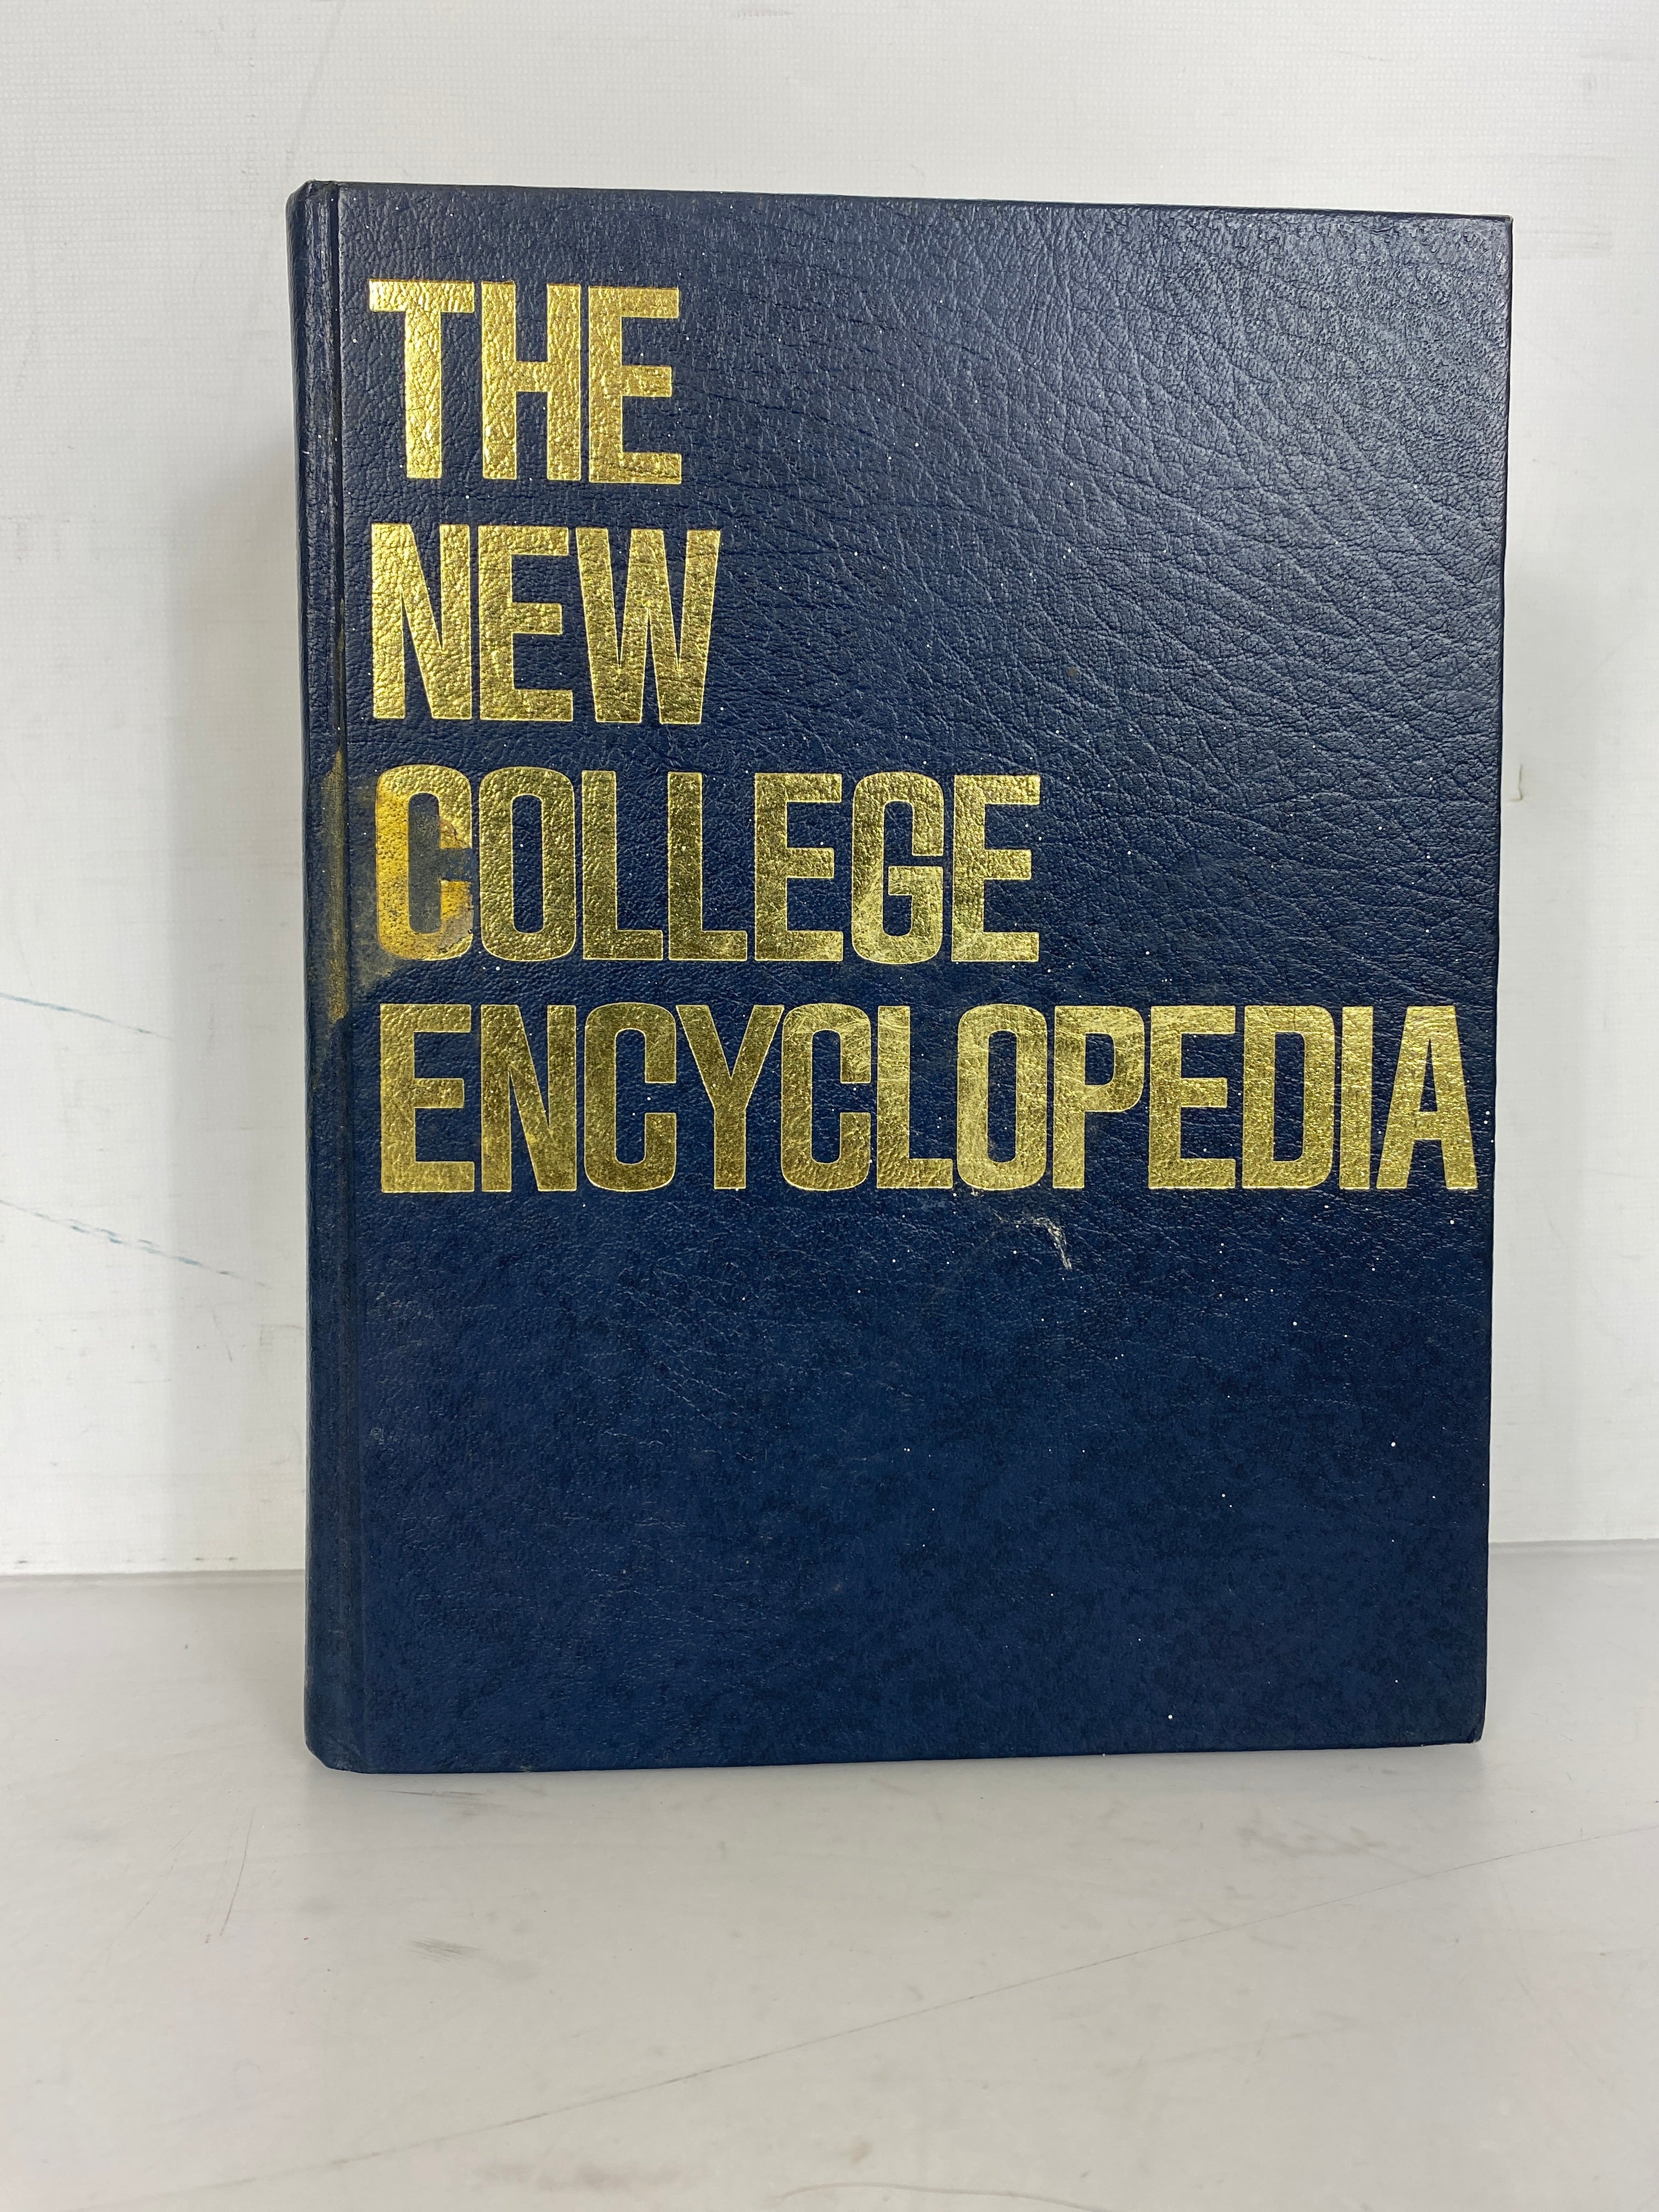 The New College Encyclopedia 1978 Galahad Books HC